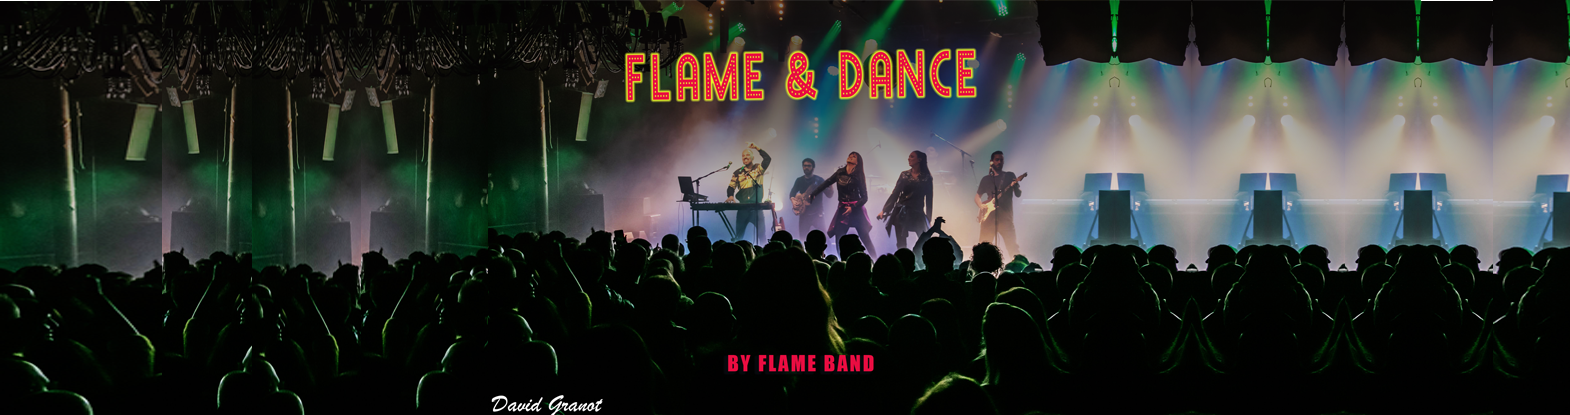 FLAME & DANCE מסיבת העשורים